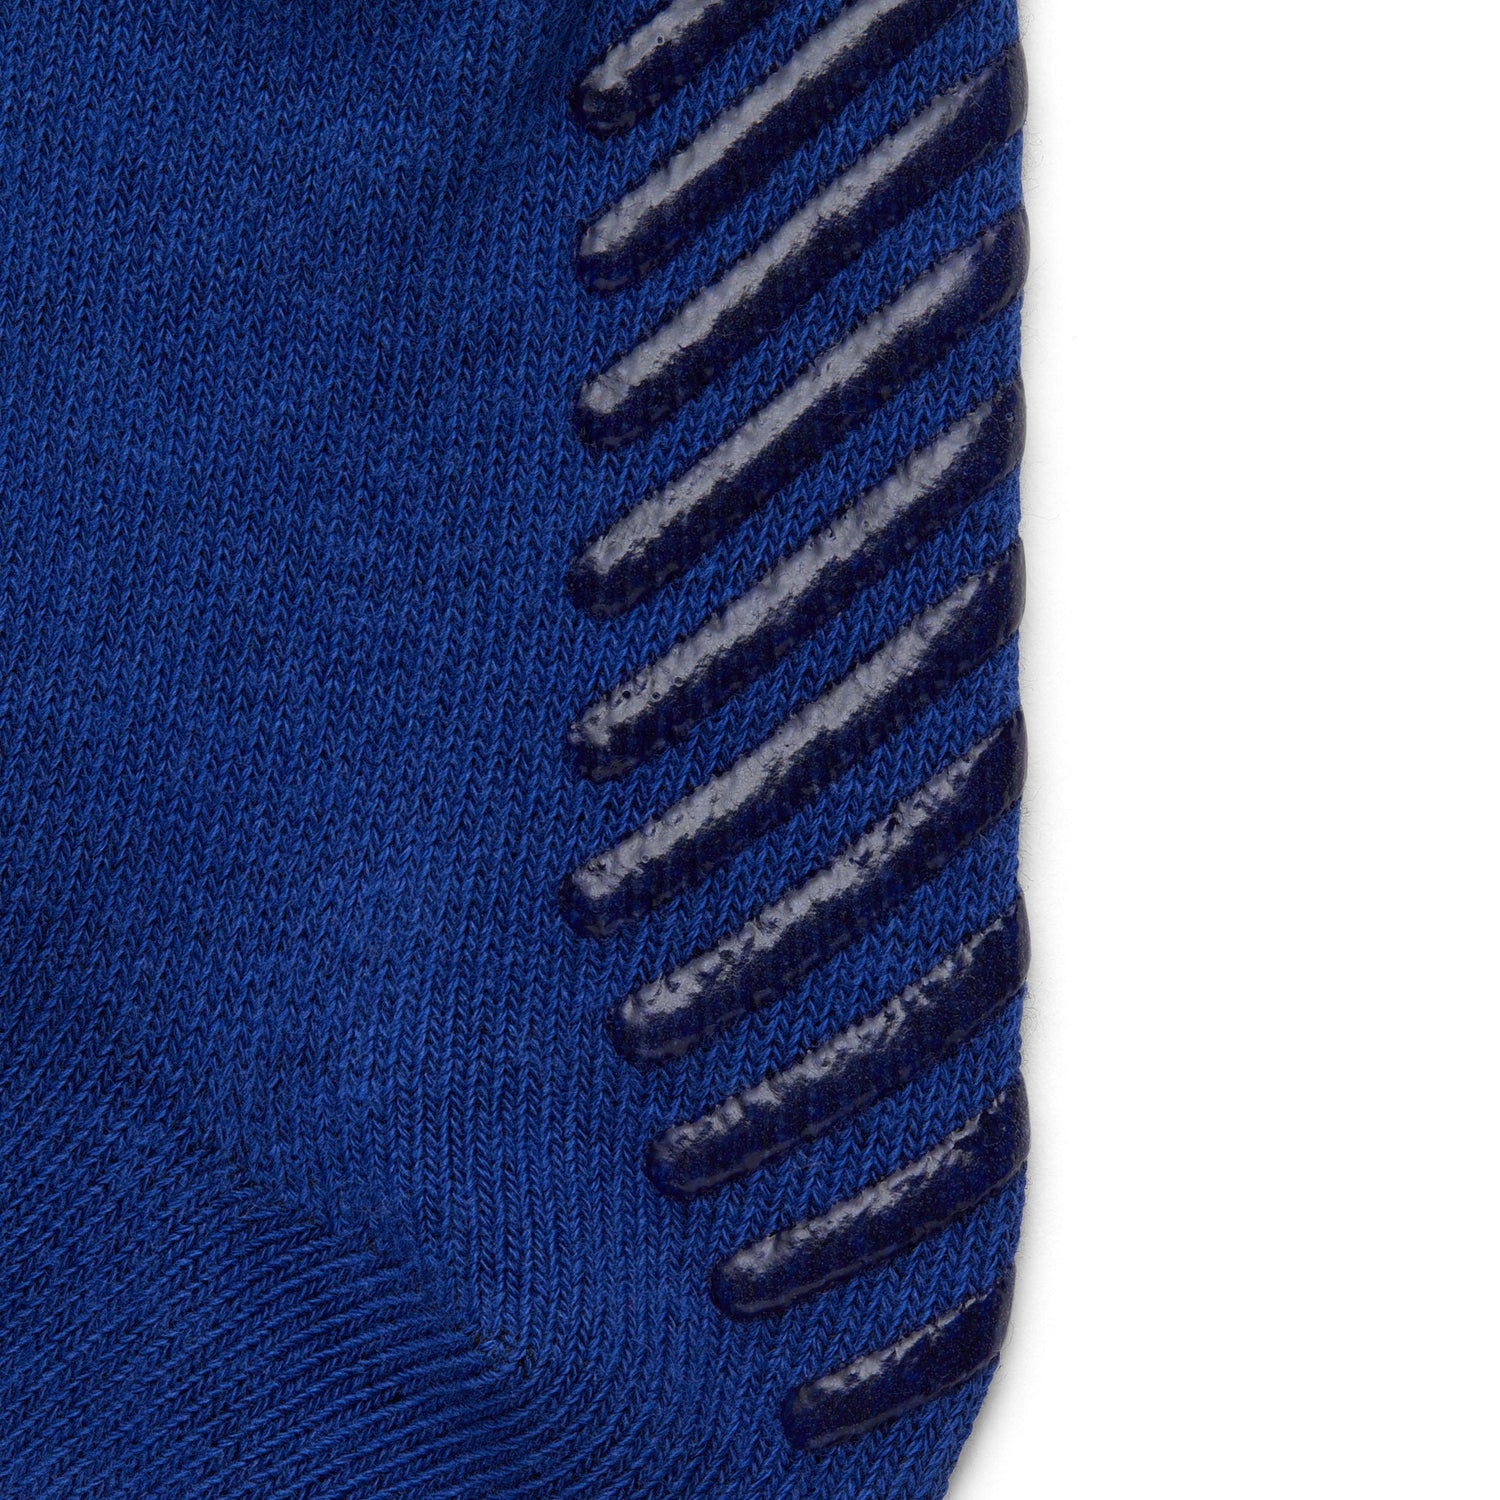 Close up of blue anti slip kids socks with tread pattern on the bottom.